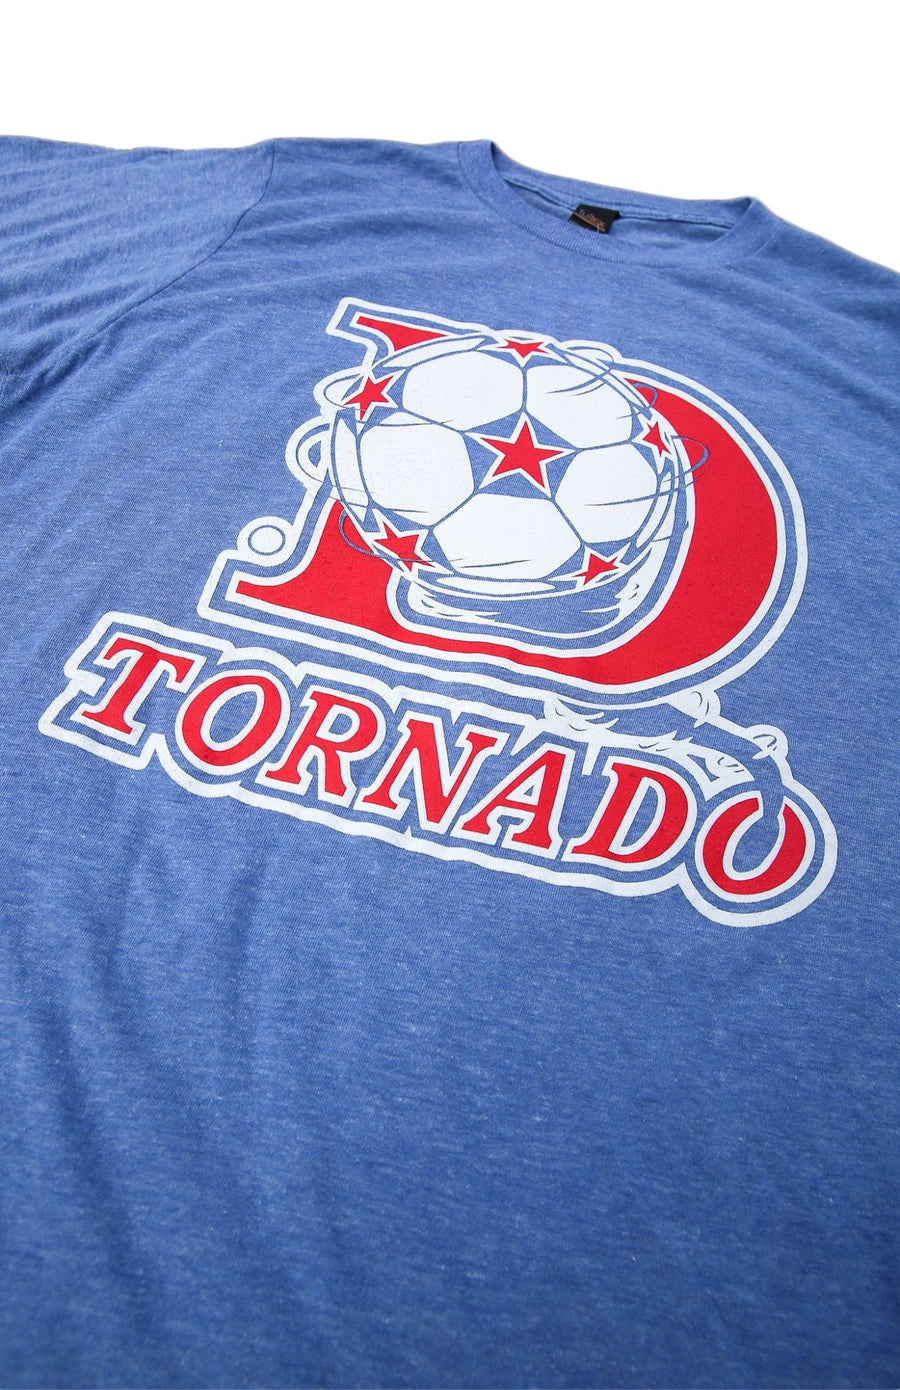 Dallas Tornado Tee - Soccer90